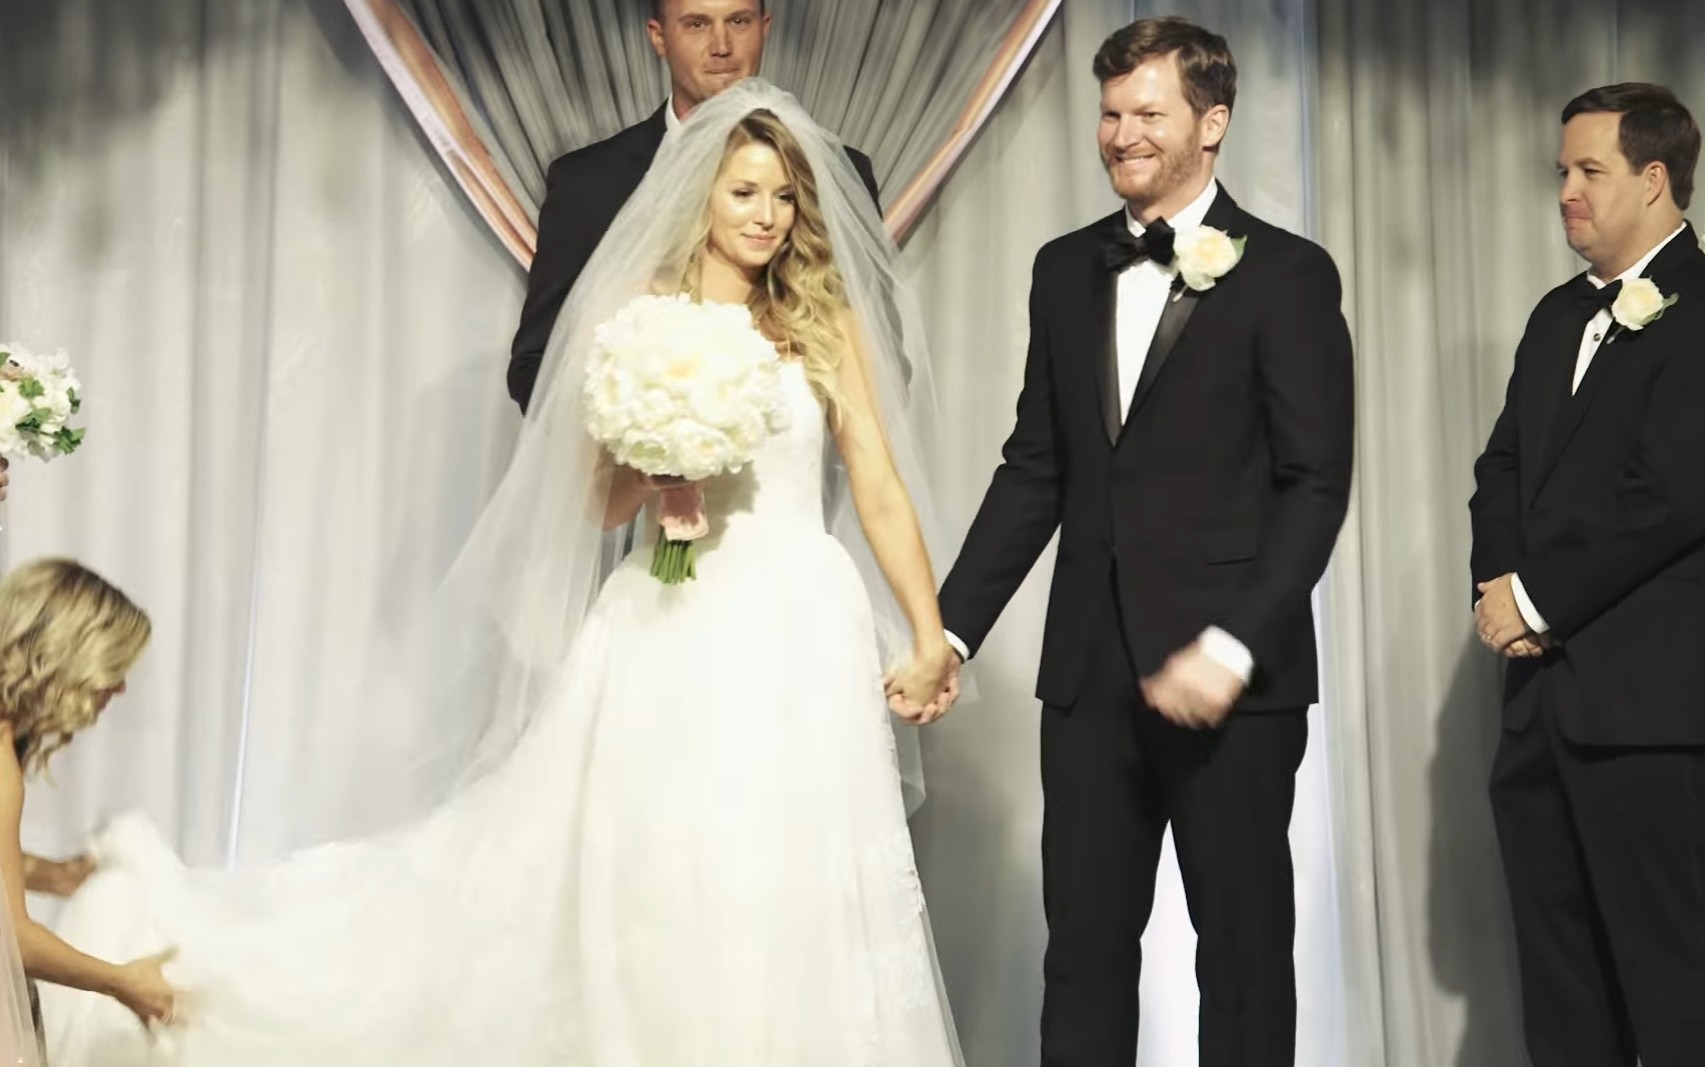 Dale Earnhardt, Jr. got married on New Year's Eve